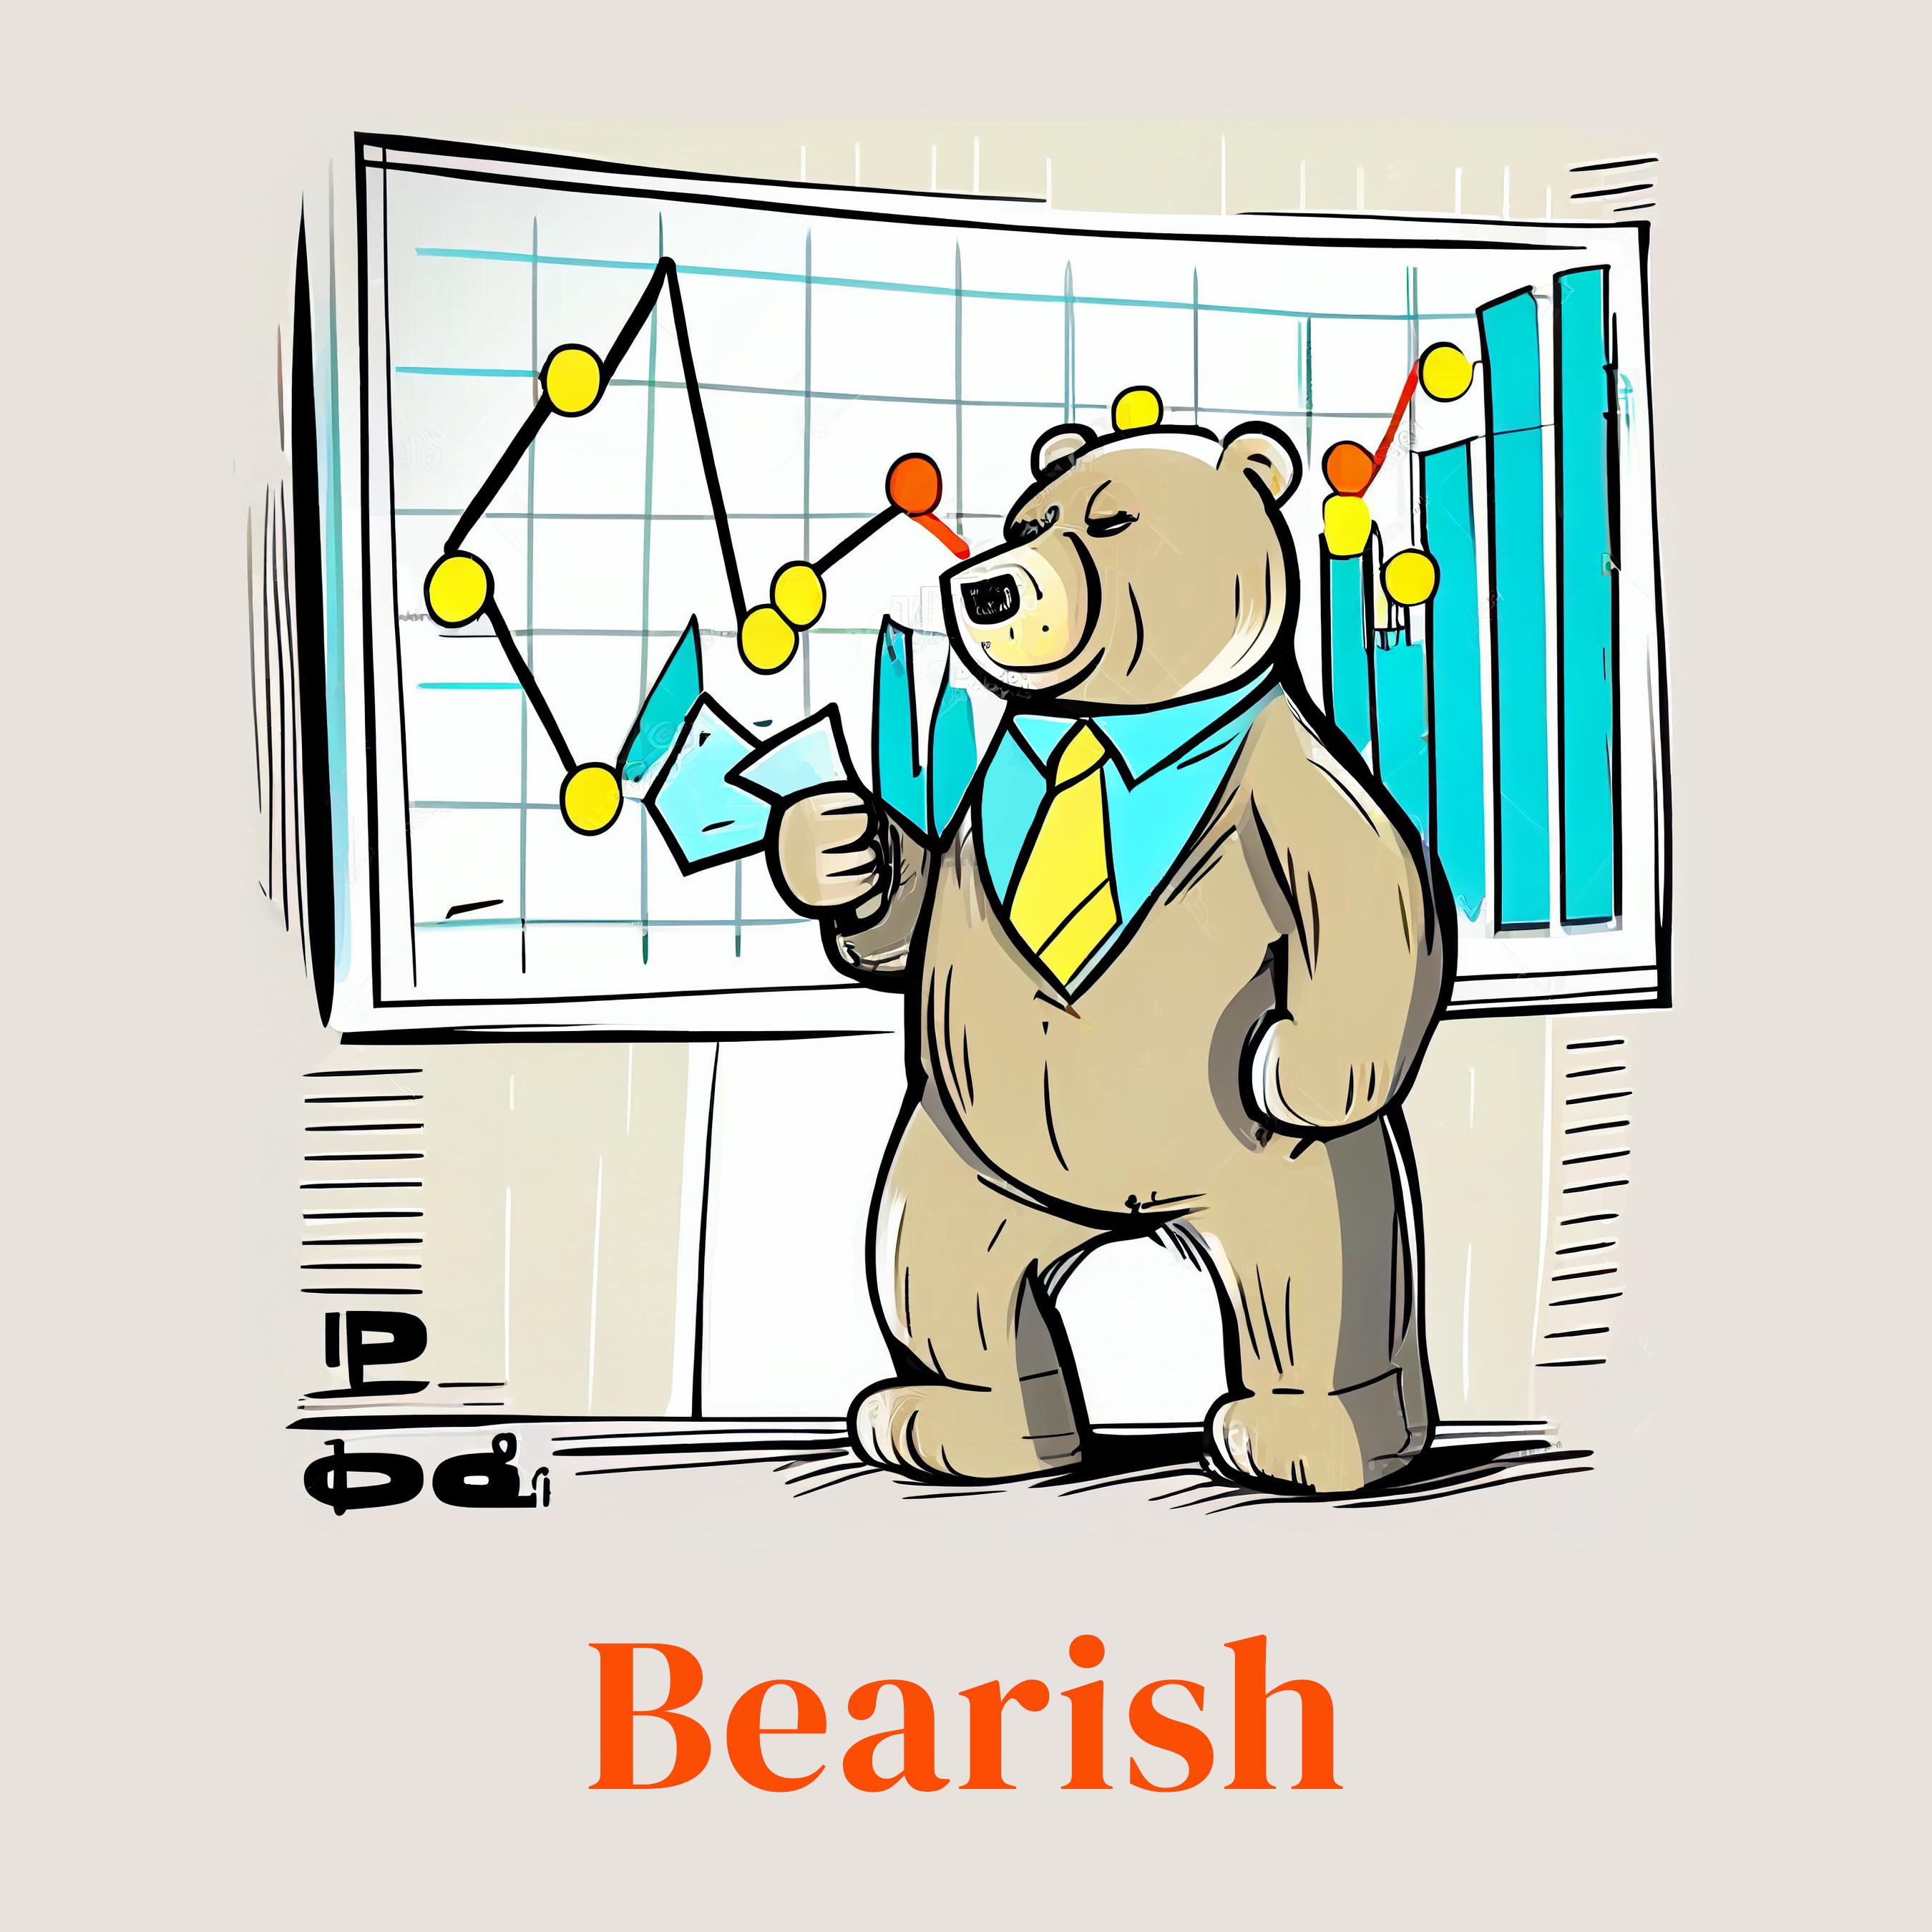 Bear on the stock market (bearish) NFT cruzo